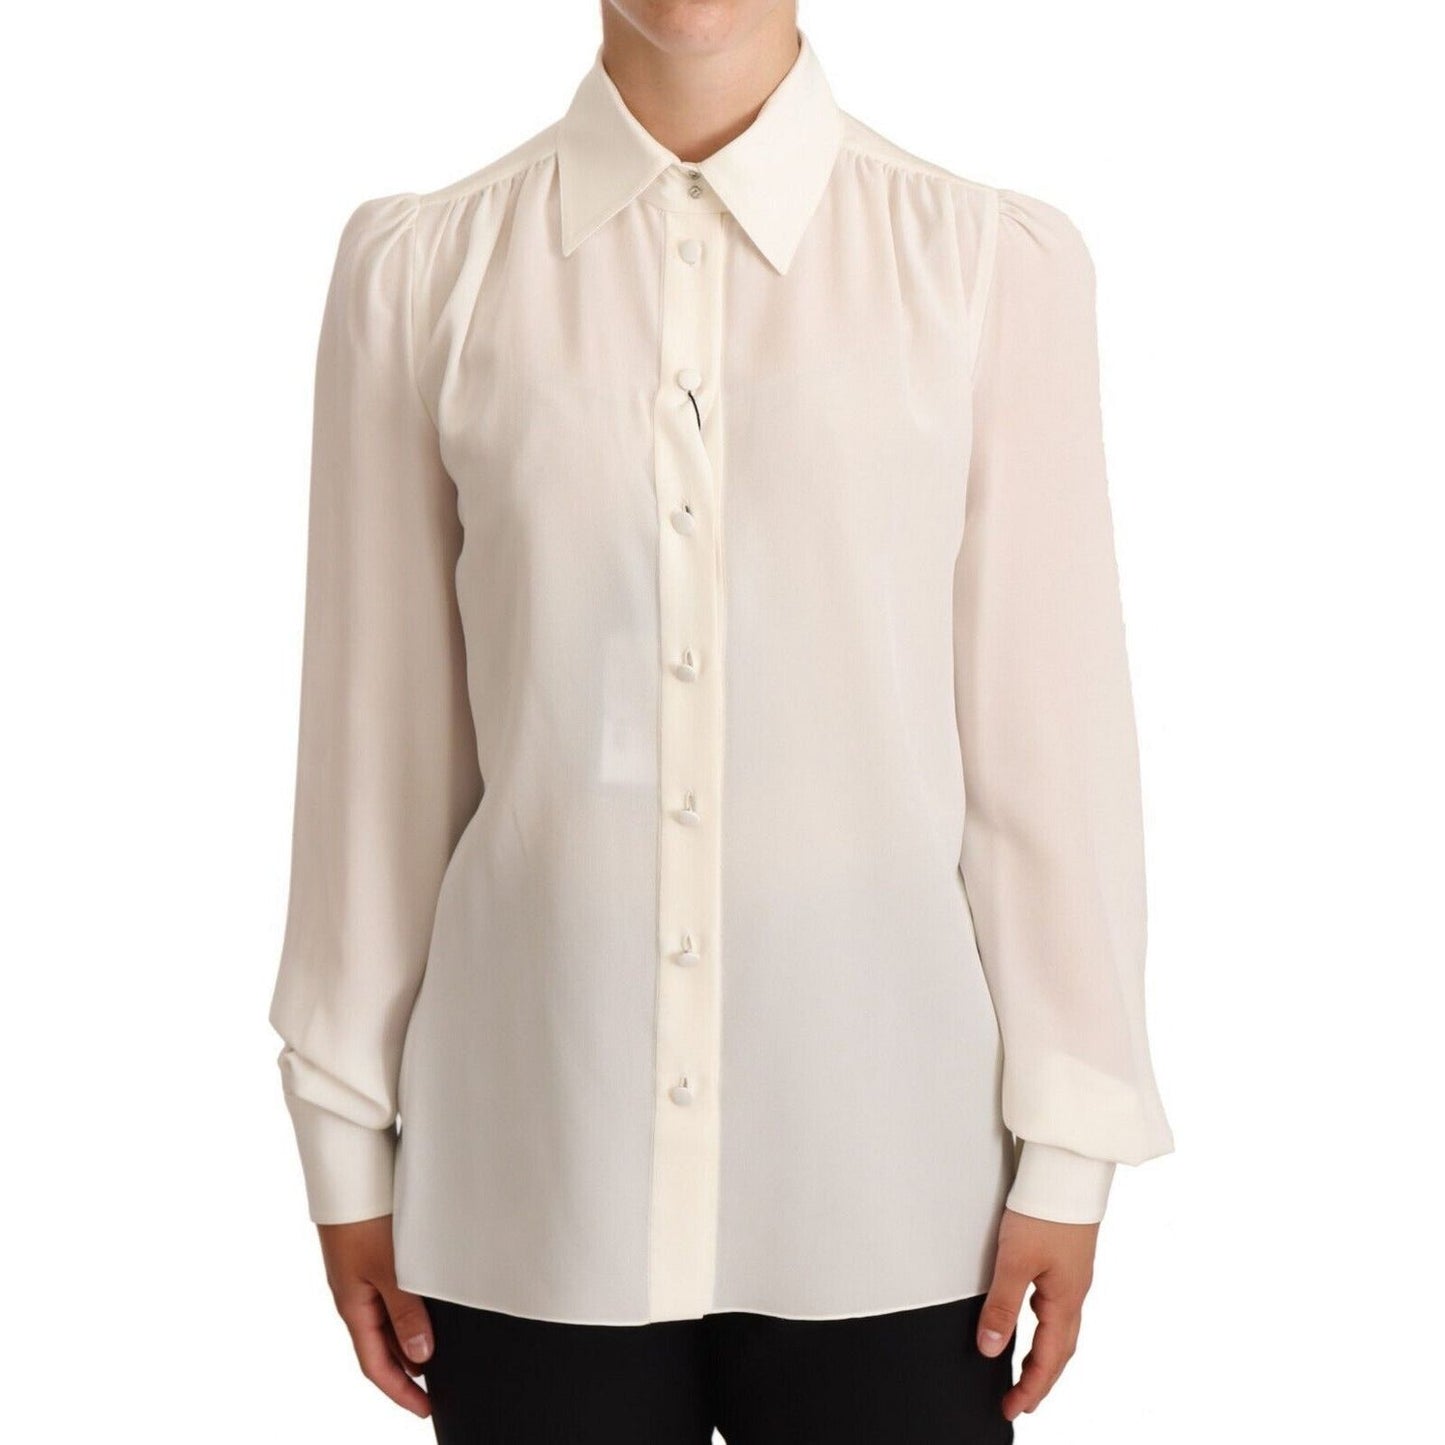 Dolce & Gabbana Elegant Silk Top in Off White white-long-sleeve-polo-shirt-top-blouse s-l1600-103-131739ed-99b.jpg